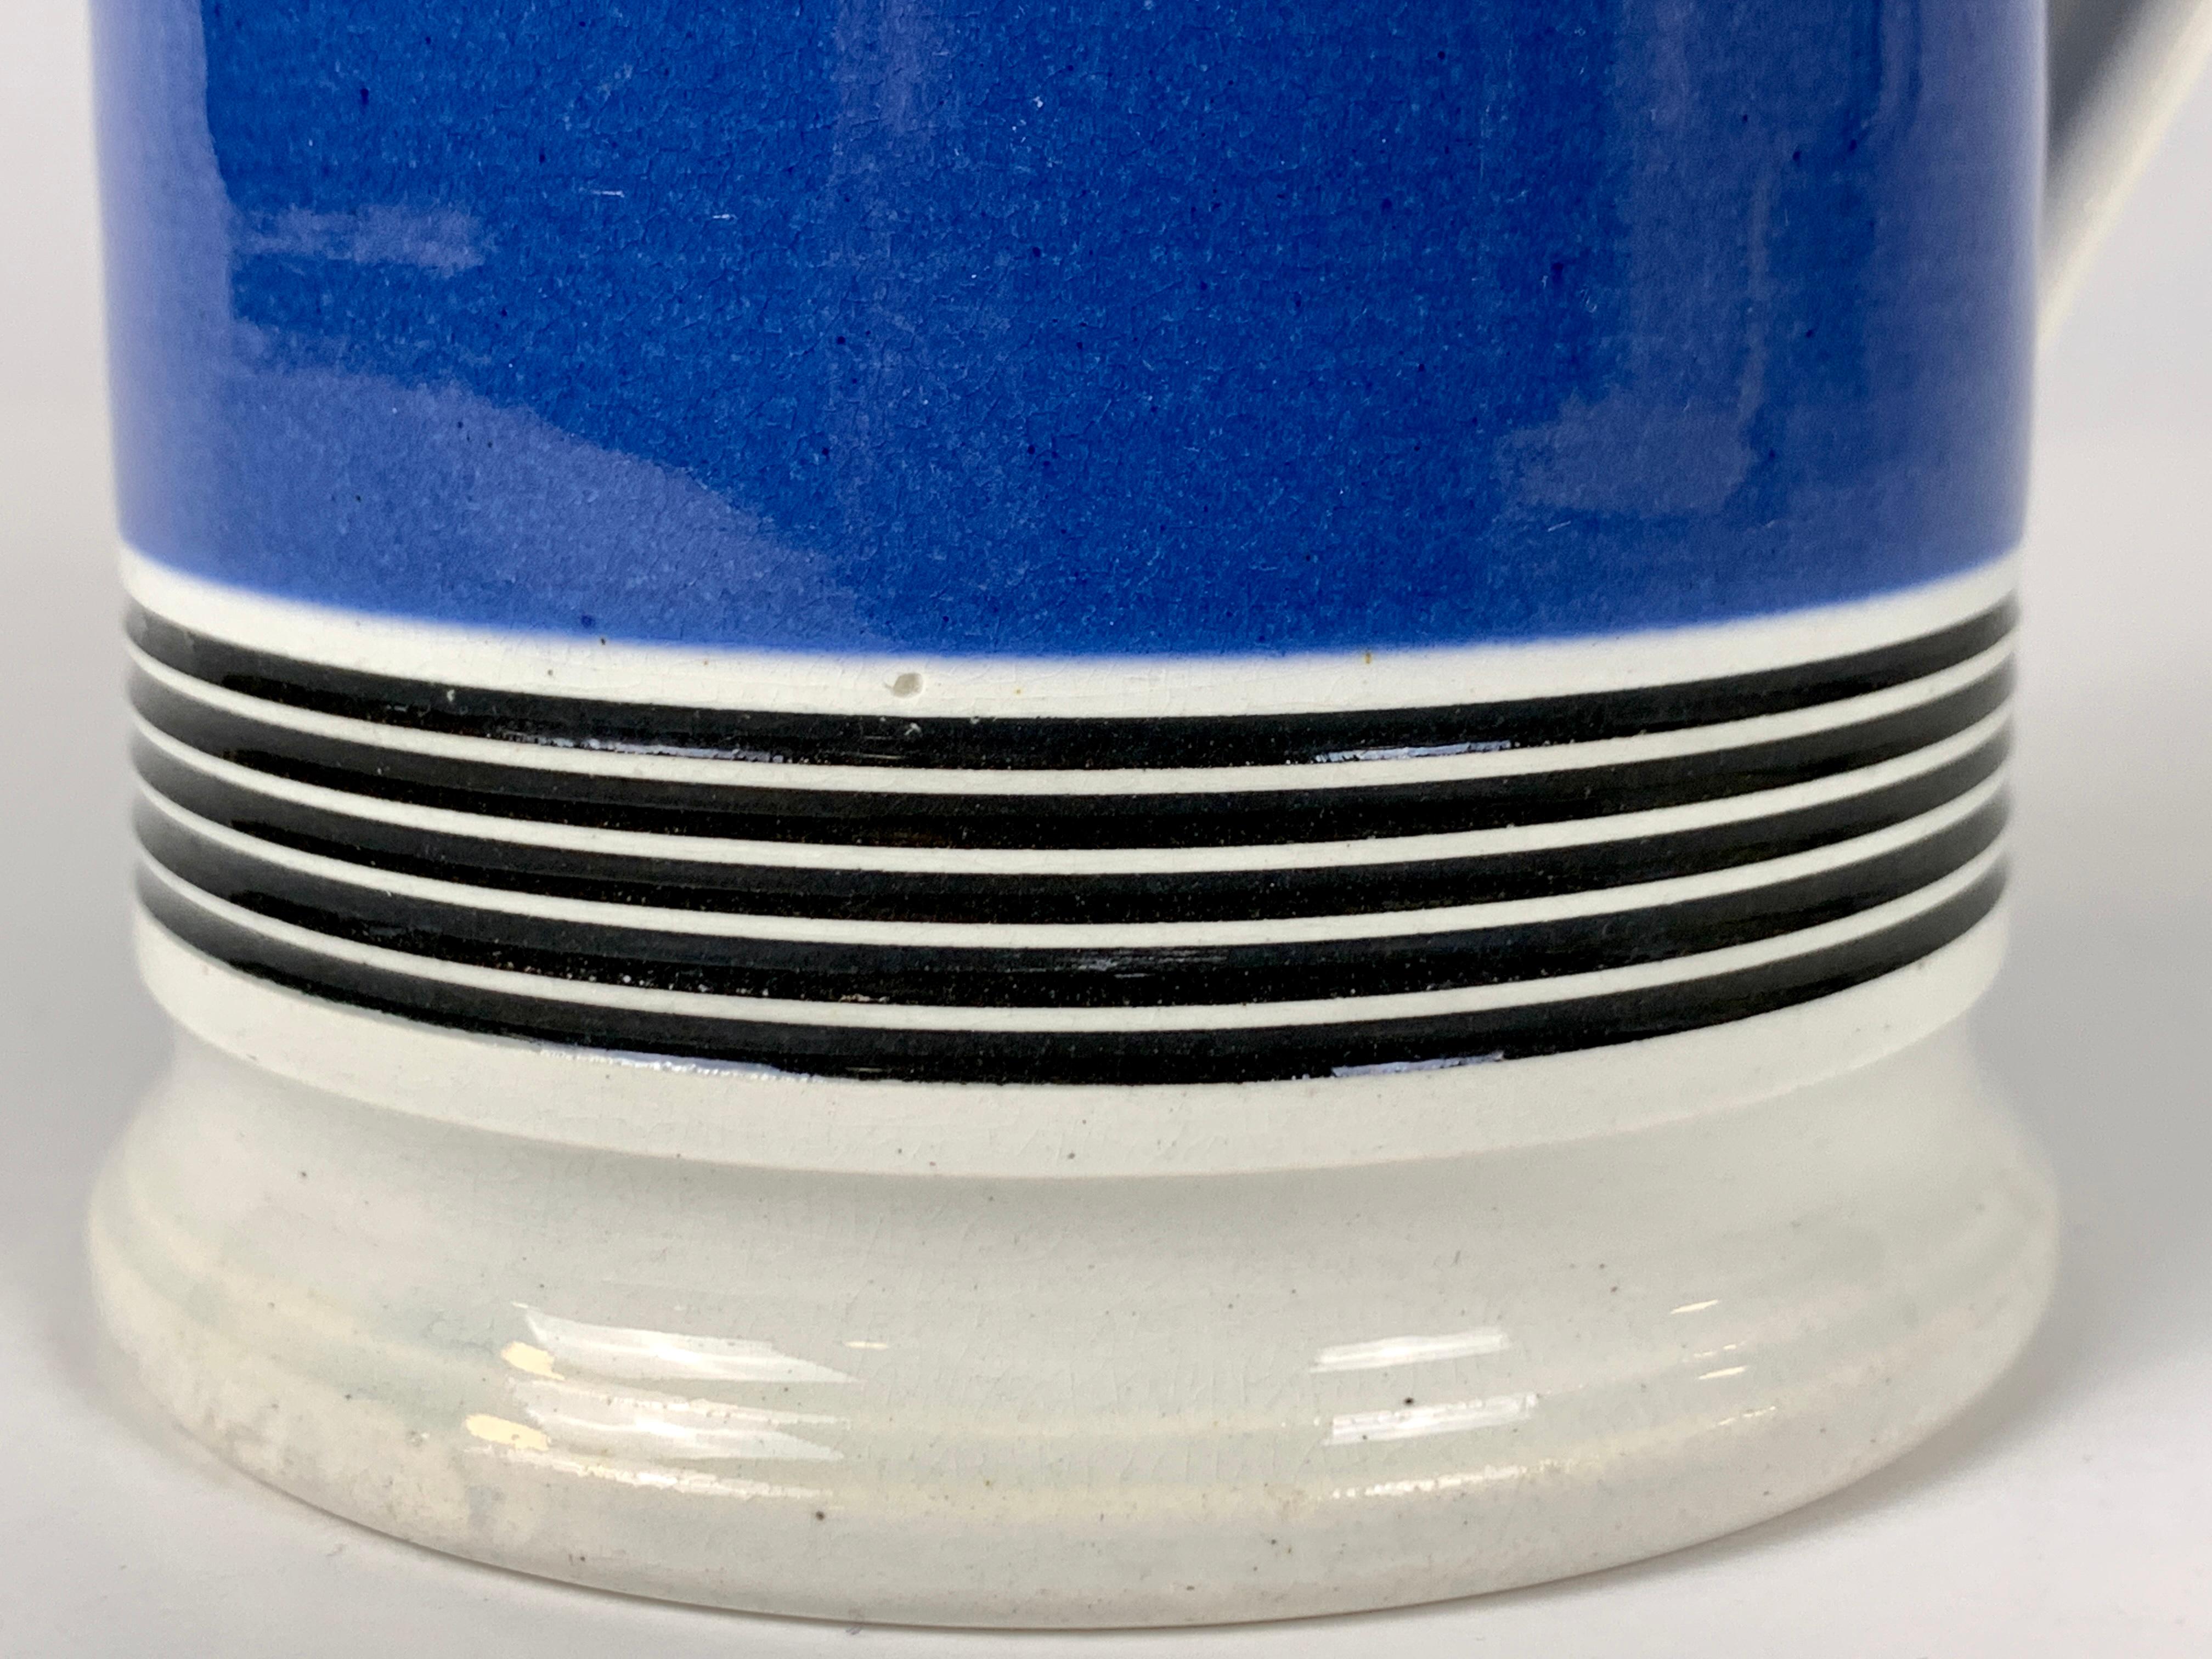 Mochaware Mug with Royal Blue Slip and Black Geometric Designs Made England 4